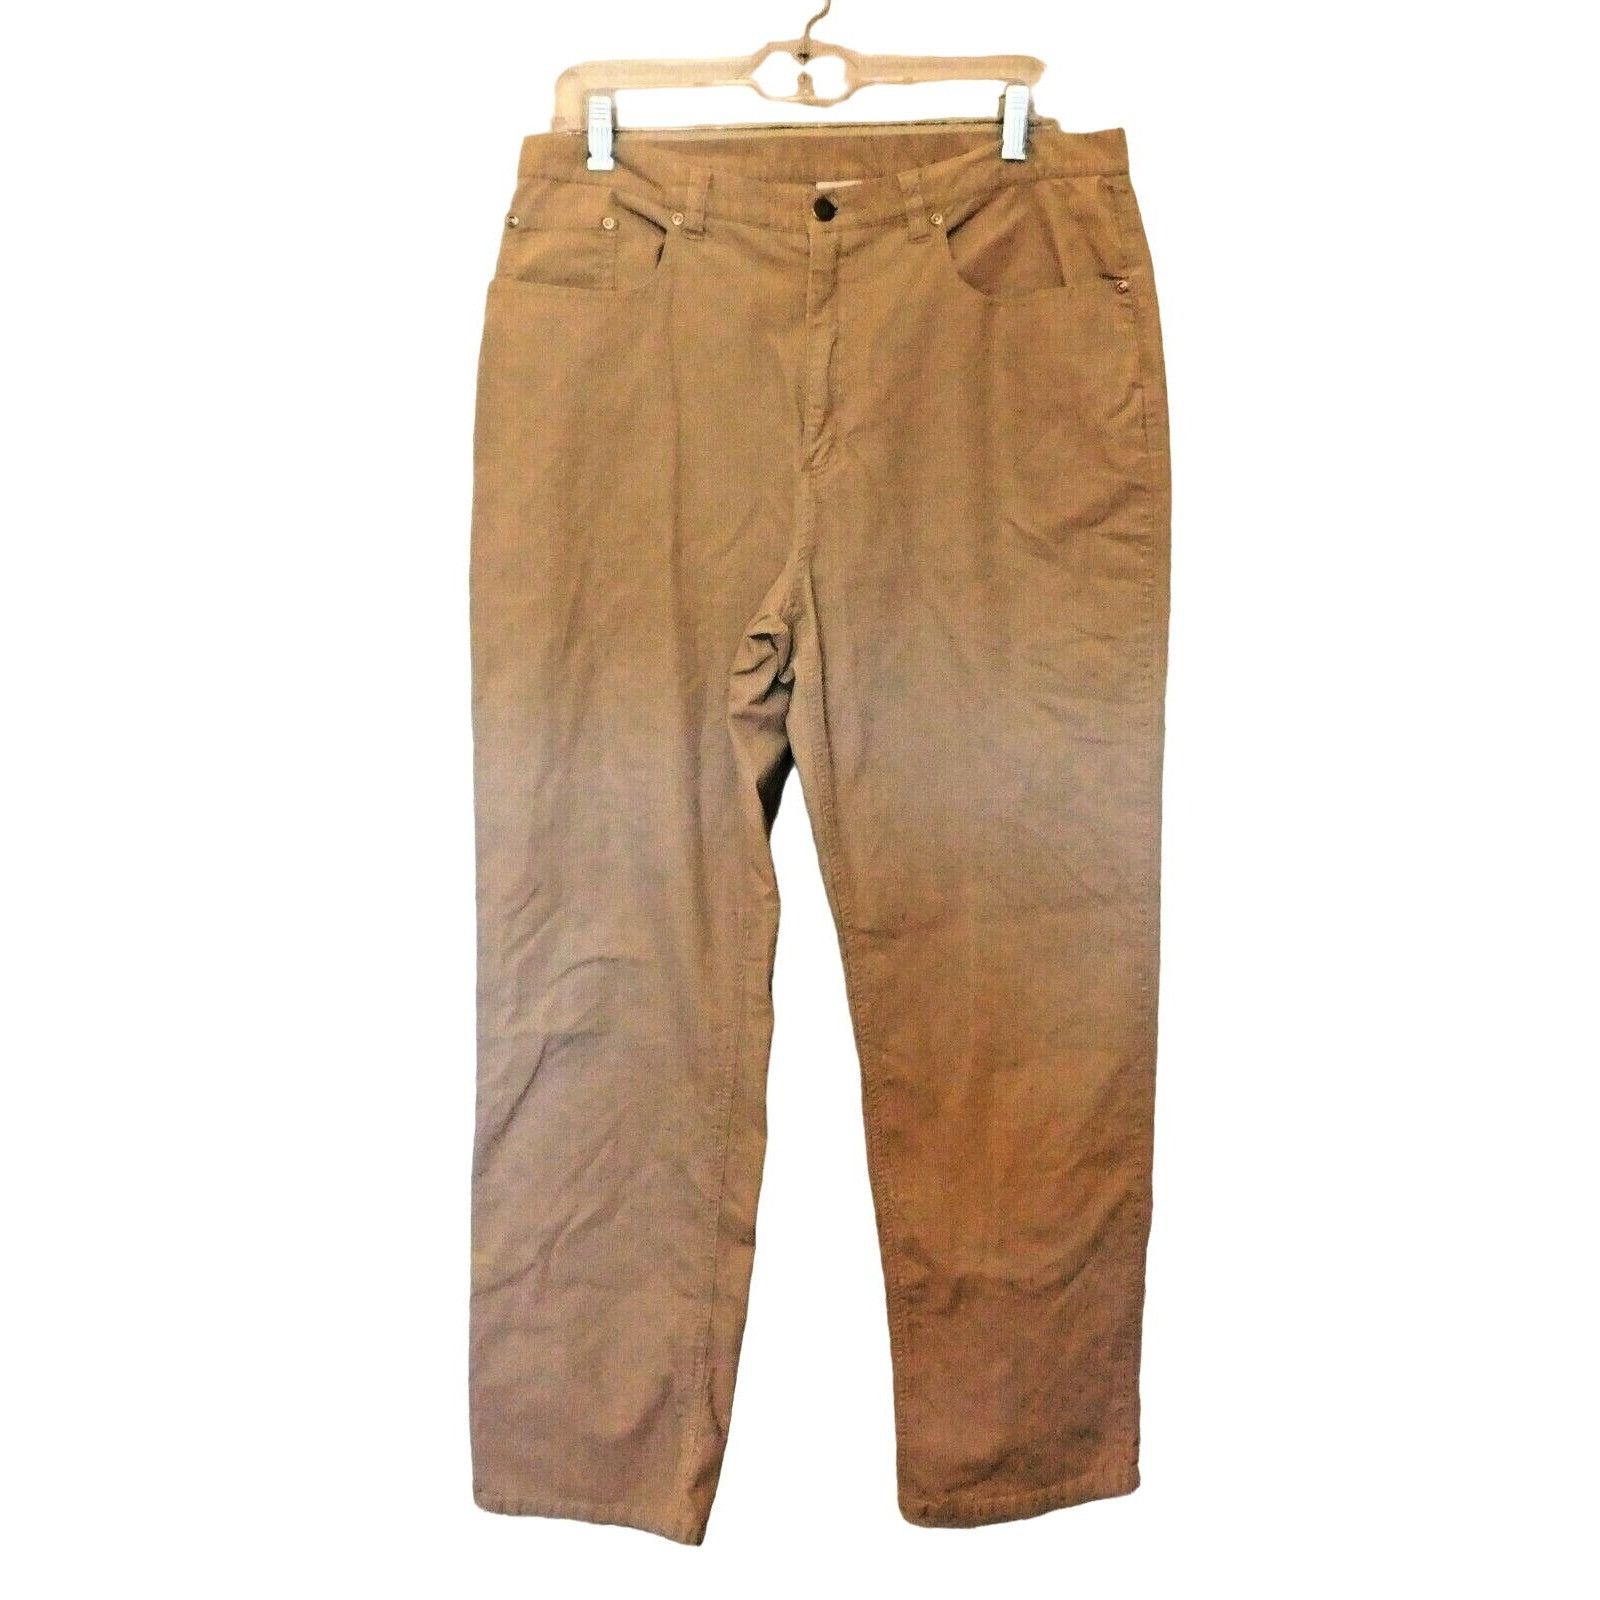 Chicos Chico's Design 2.5 Corduroy Pants L 14 Tan Straight Leg Size 36" / US 14 / IT 50 - 3 Thumbnail